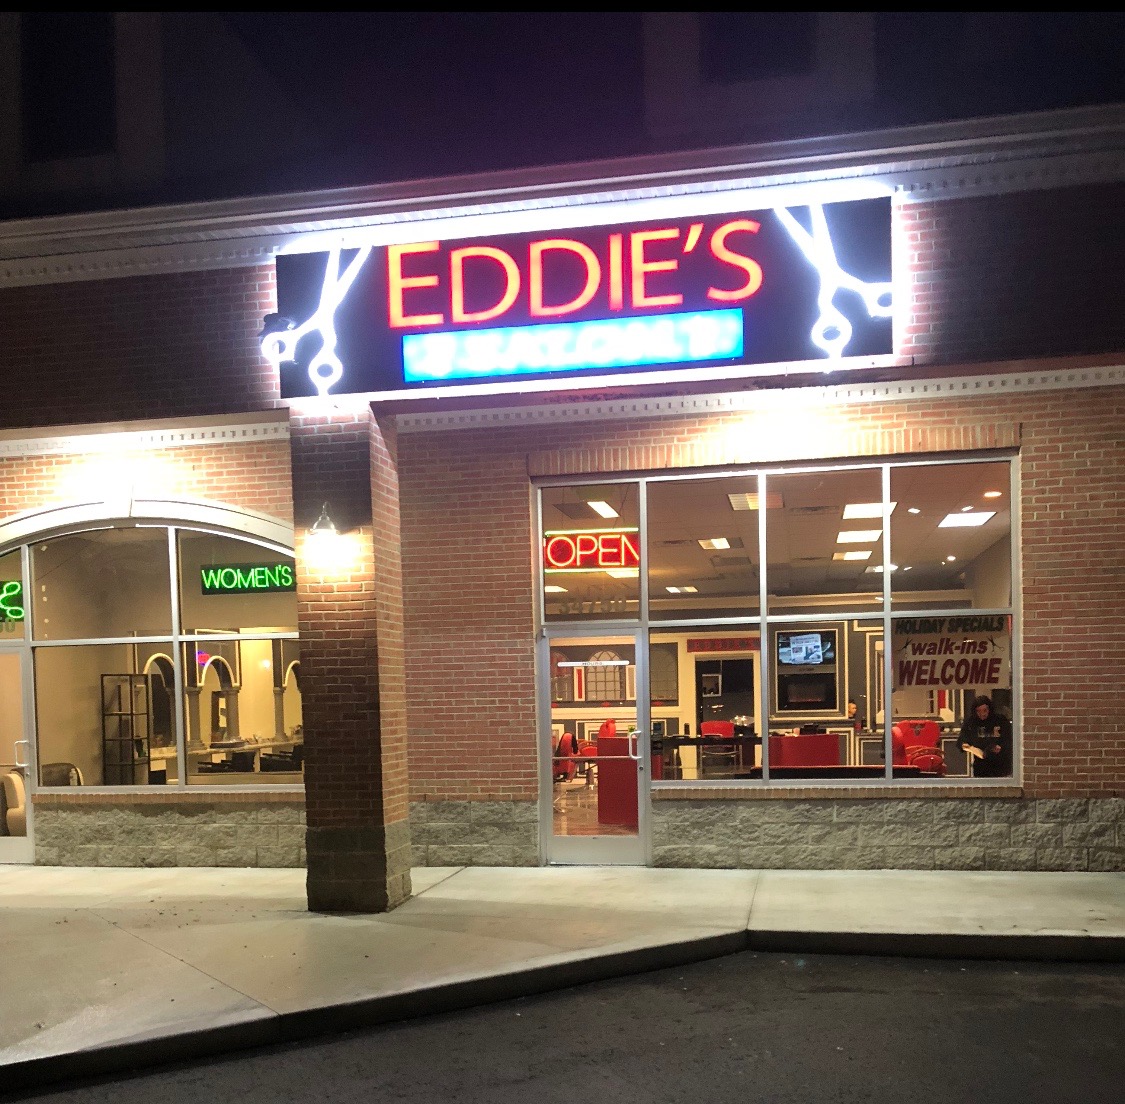 Eddies Salon